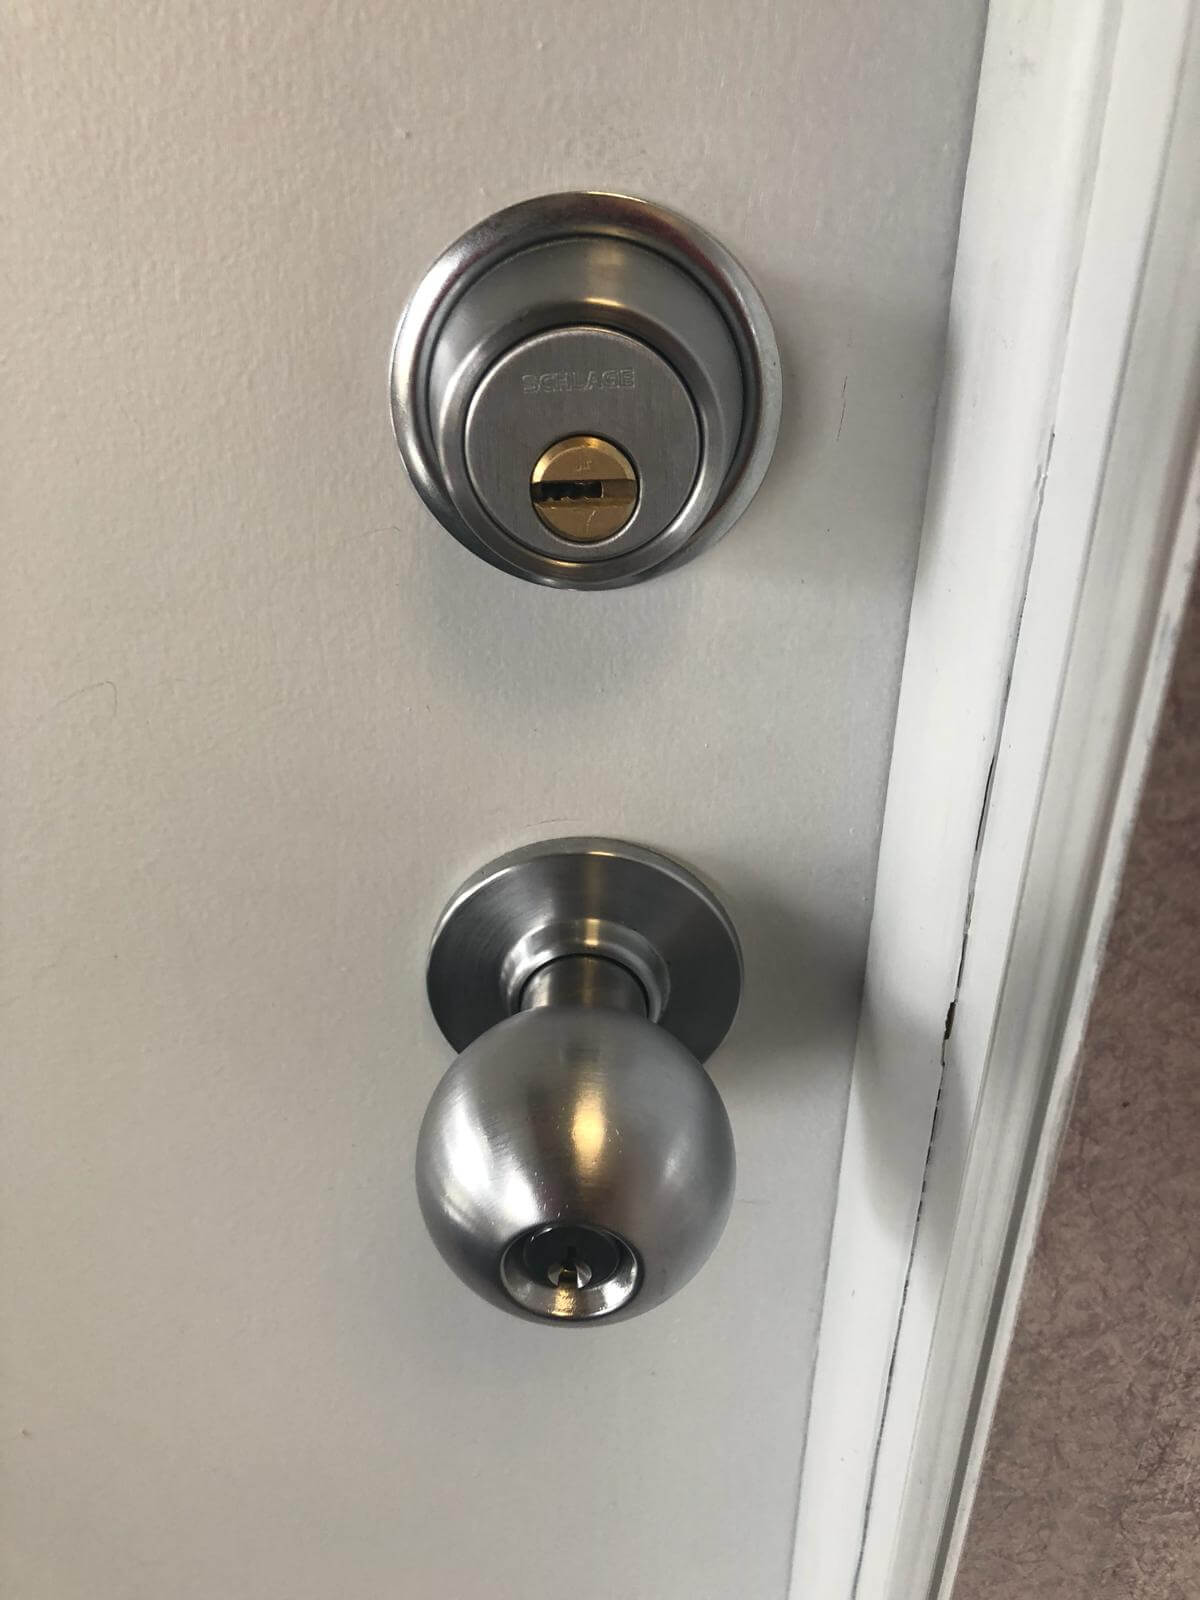 High security Schlage deadbolt and doorknob